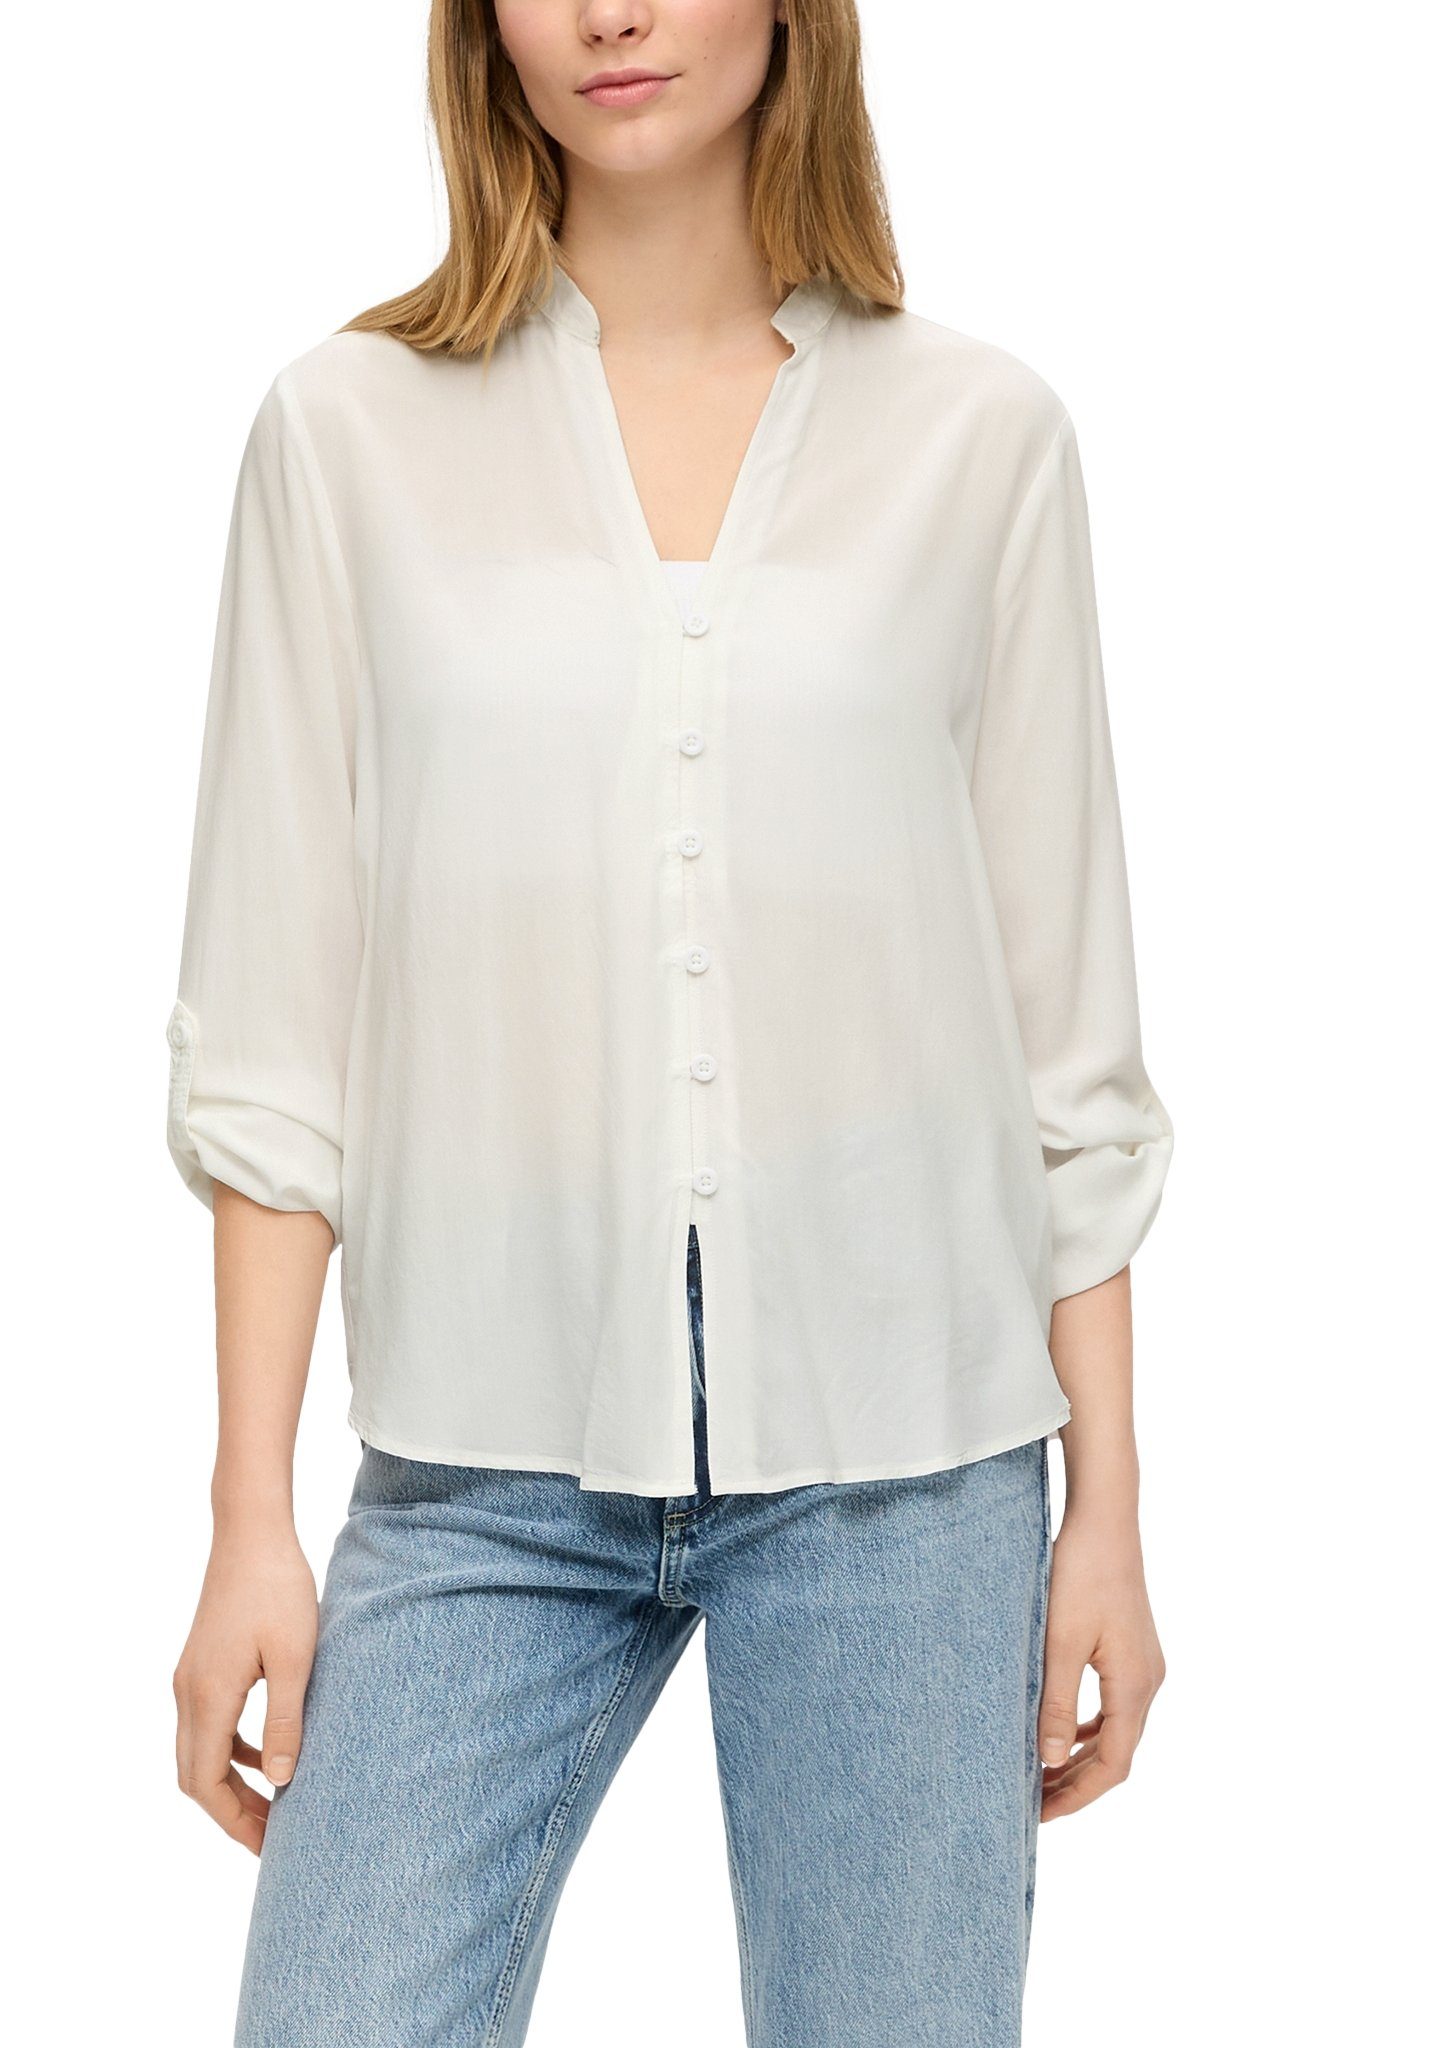 Q S designed by Lange blouse